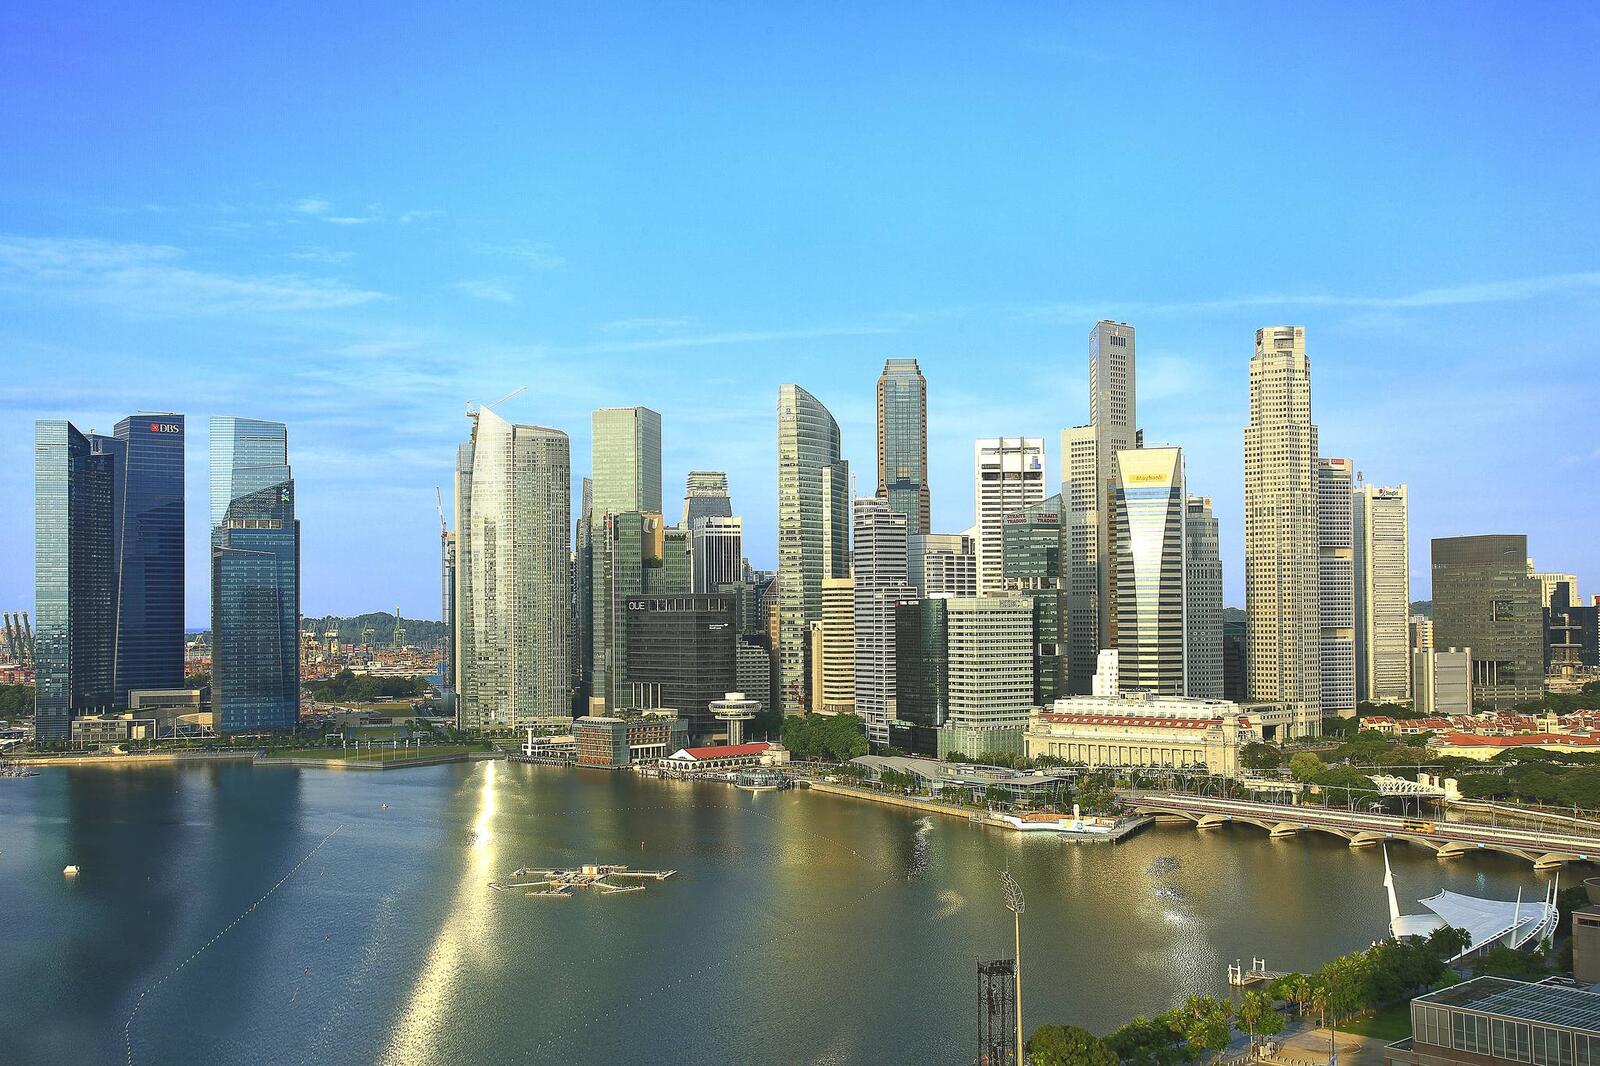 Wallpapers skyscrapers buildings Singapore on the desktop